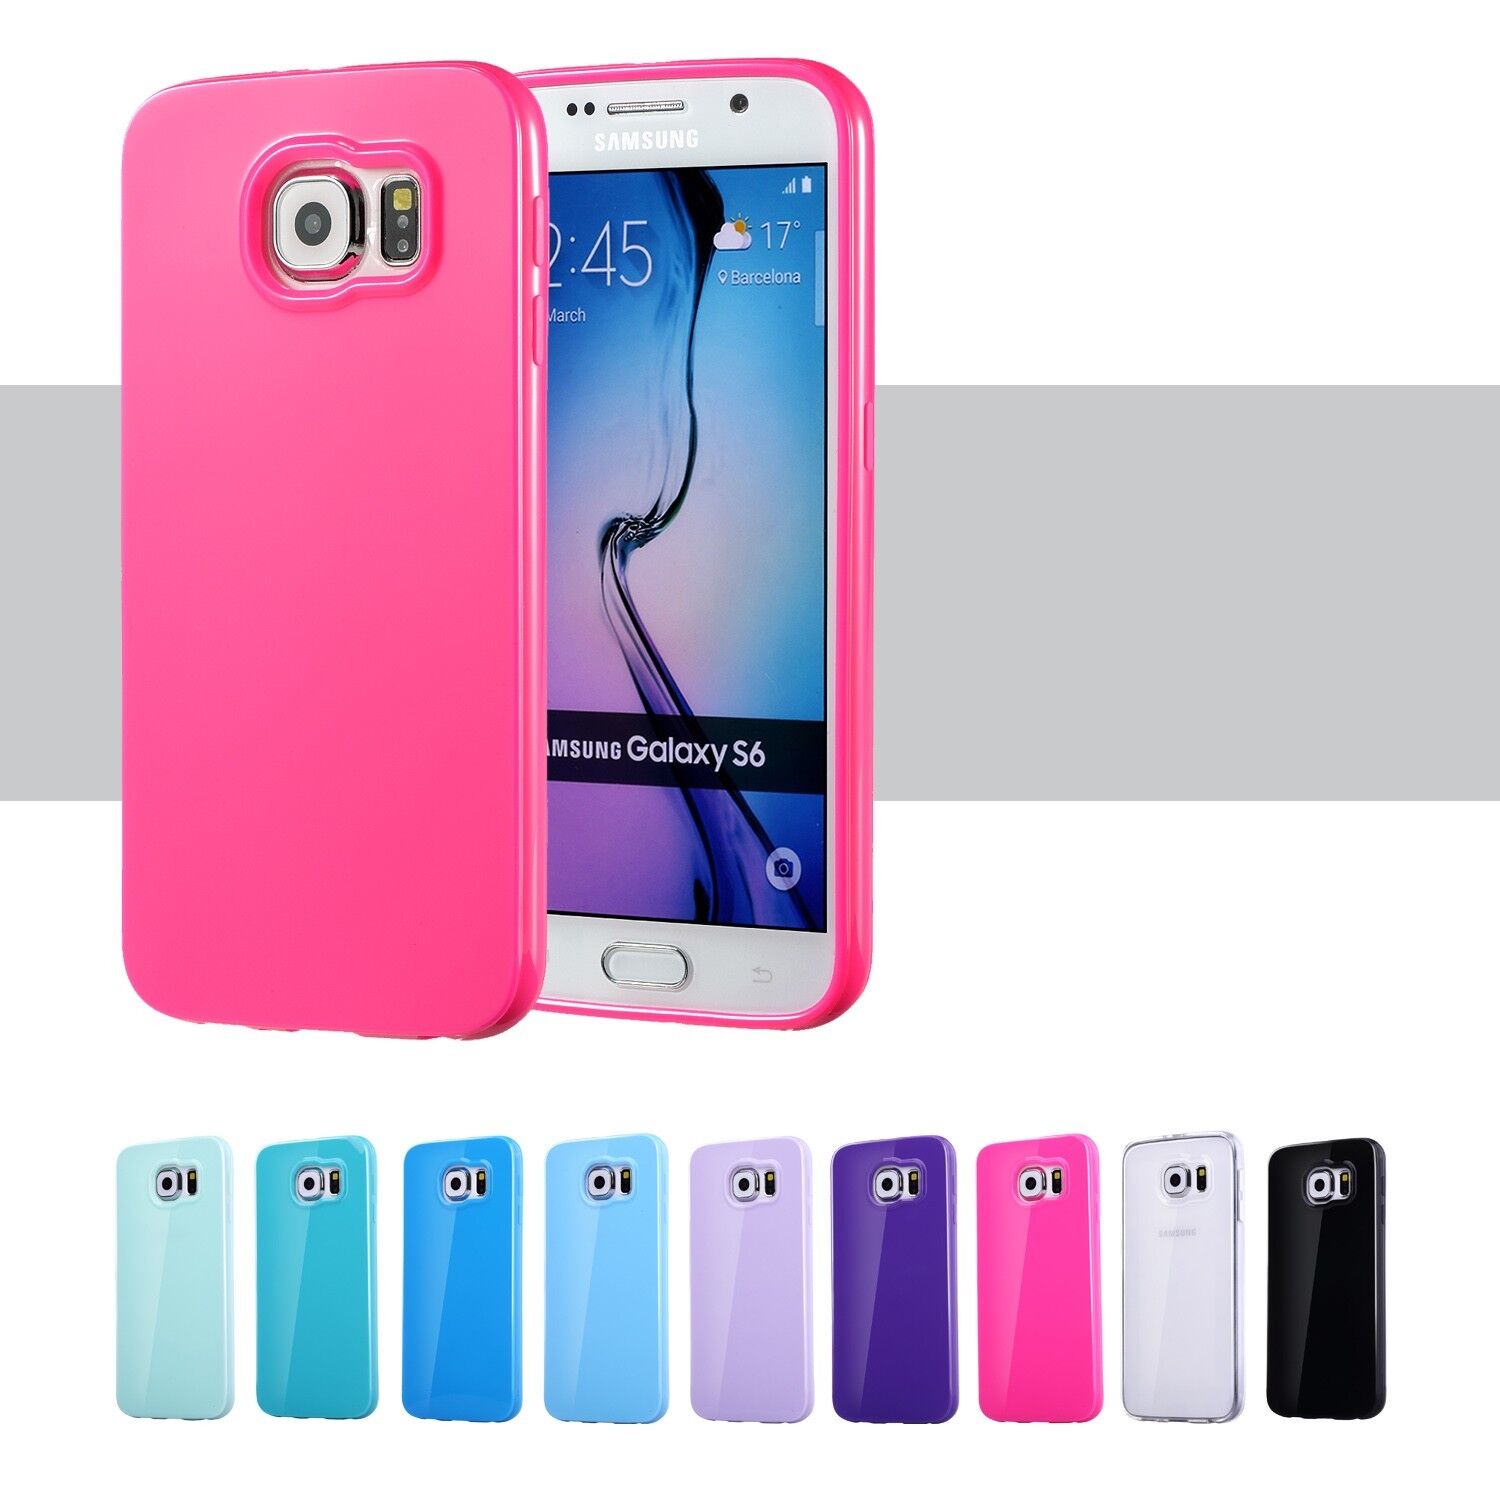 Samsung Galaxy S6 S7 S7 Edge S8 S9 Plus Case Silicone Rubber Protective Cover technext020 s6789Tpu